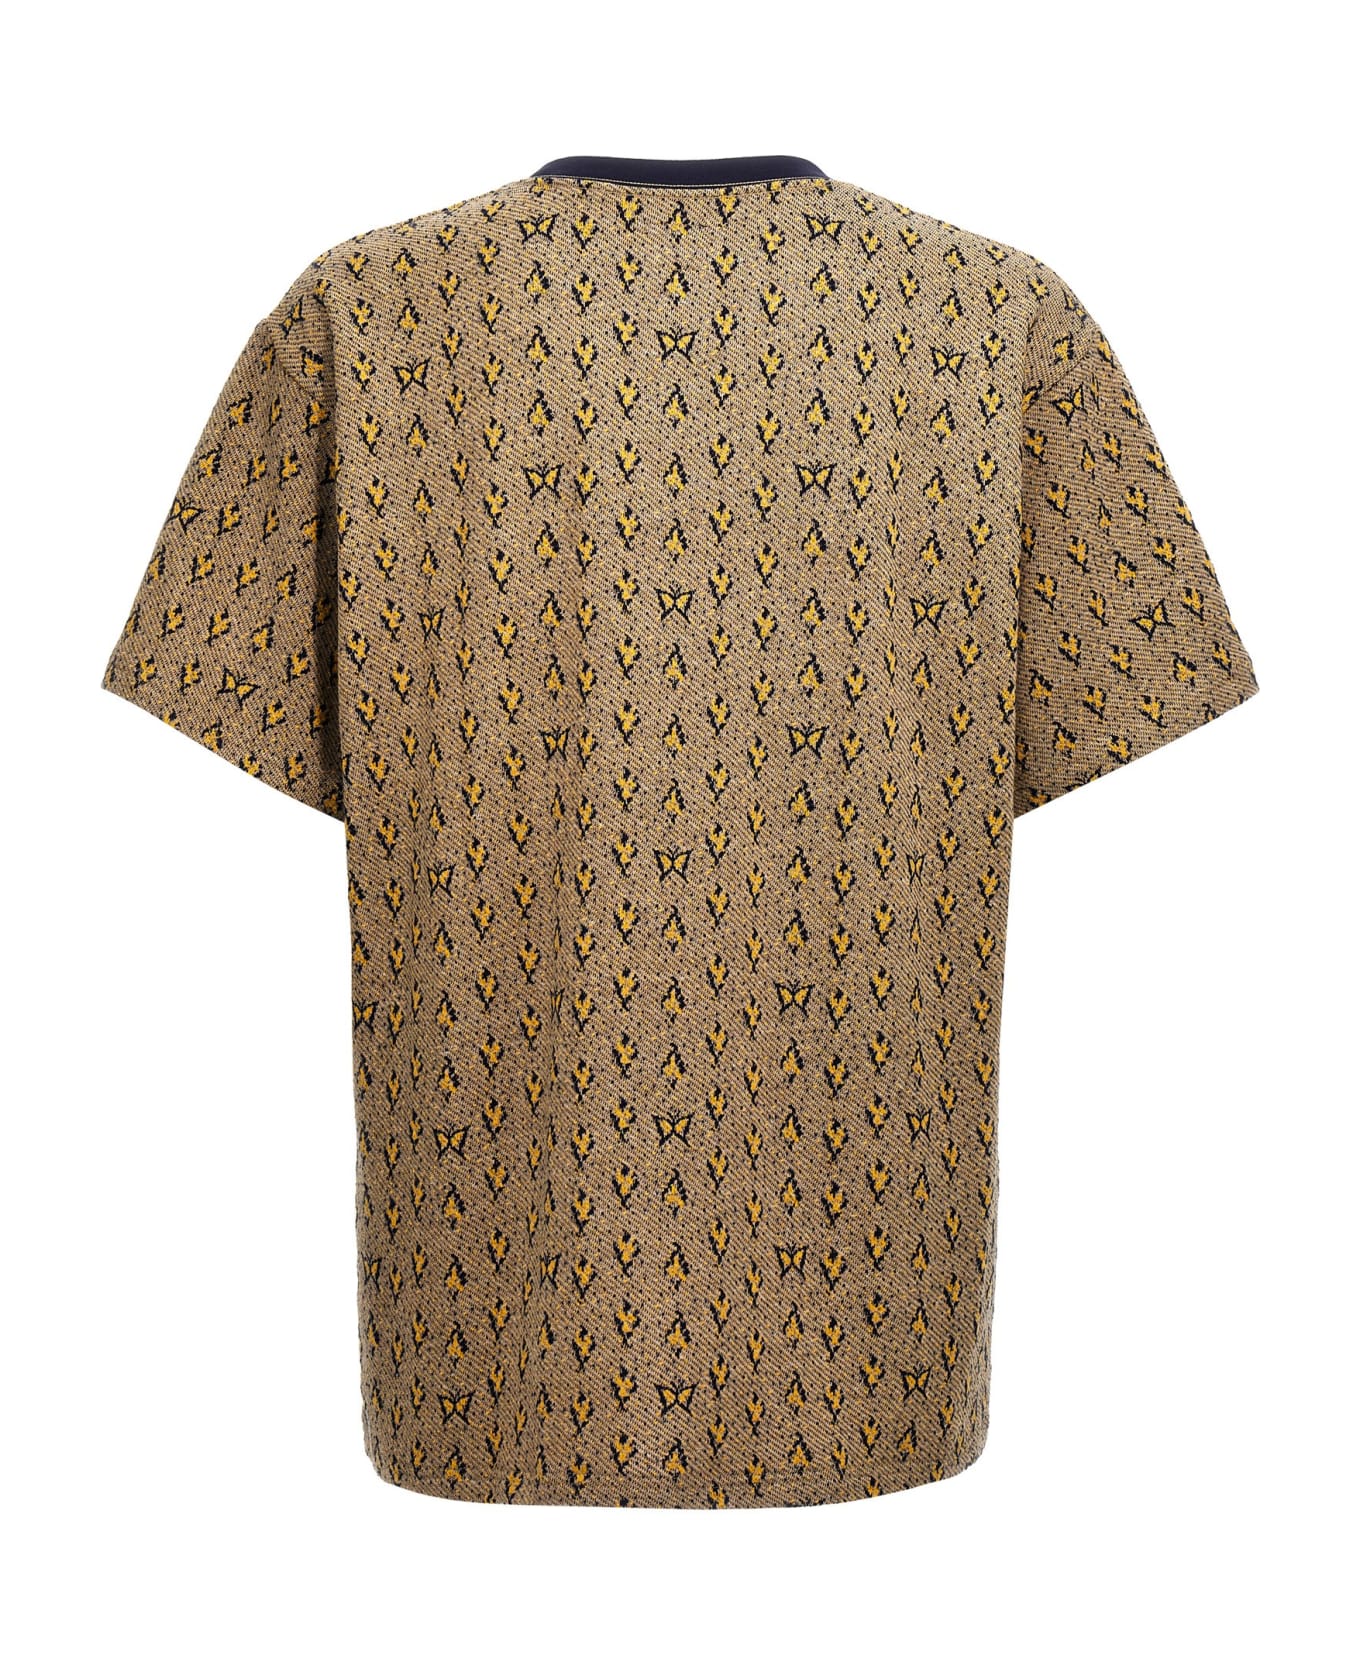 Needles Jacquard Patterned T-shirt - Multicolor シャツ